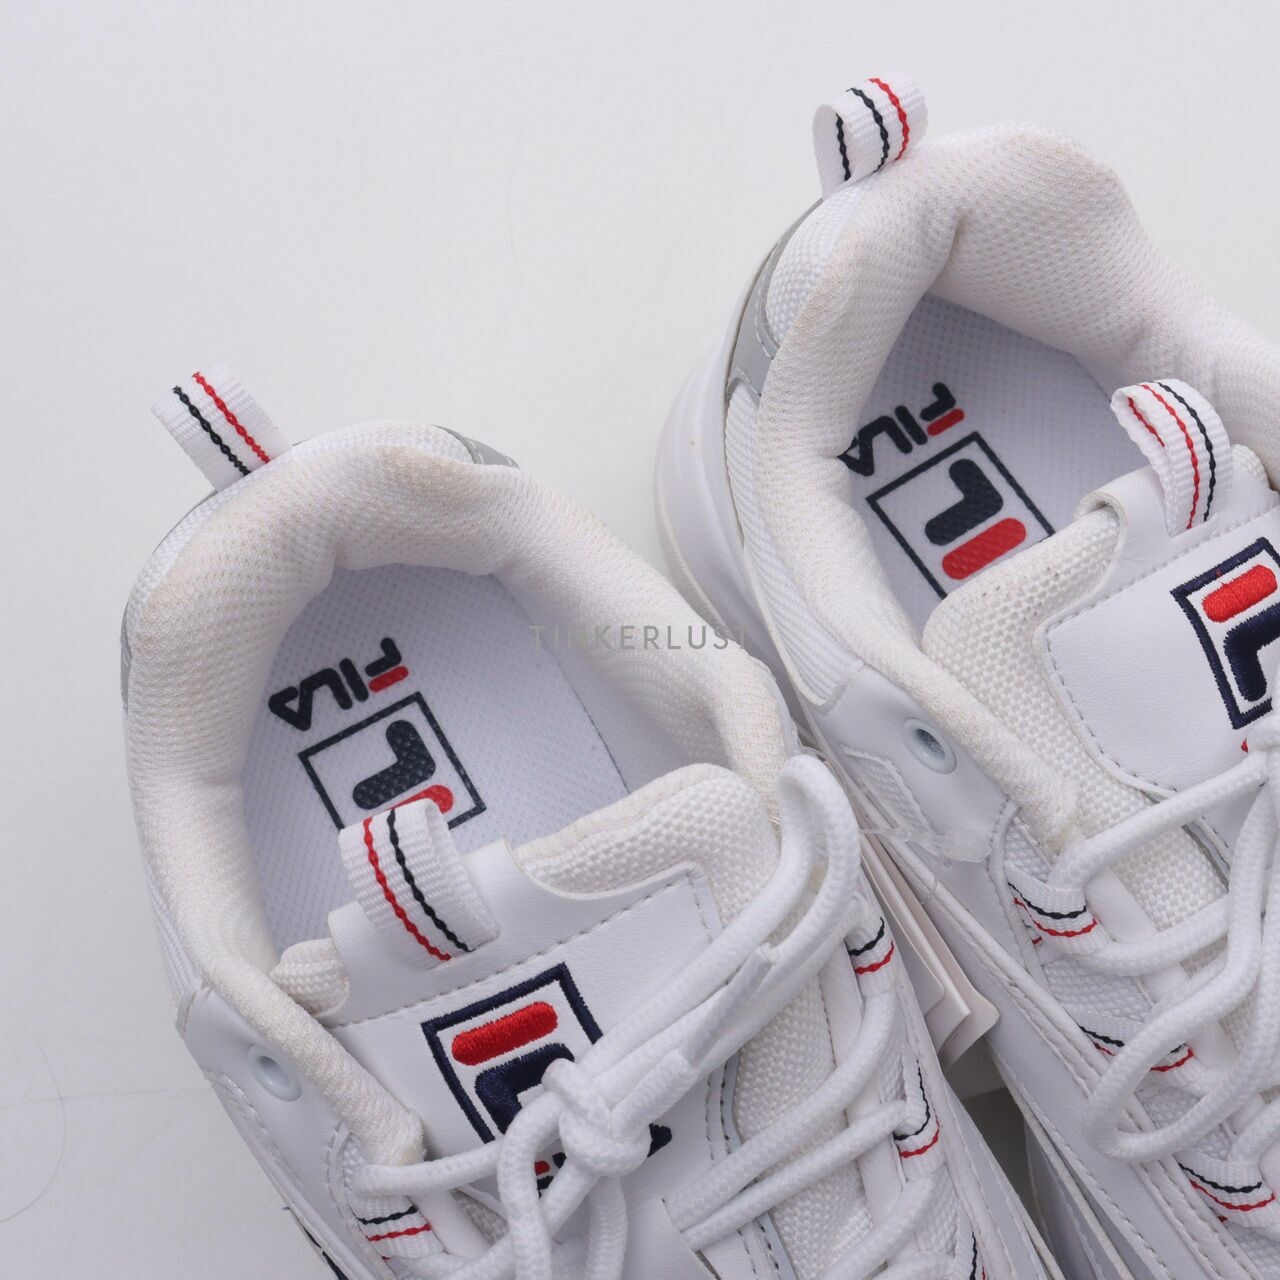 FILA White Sneakers